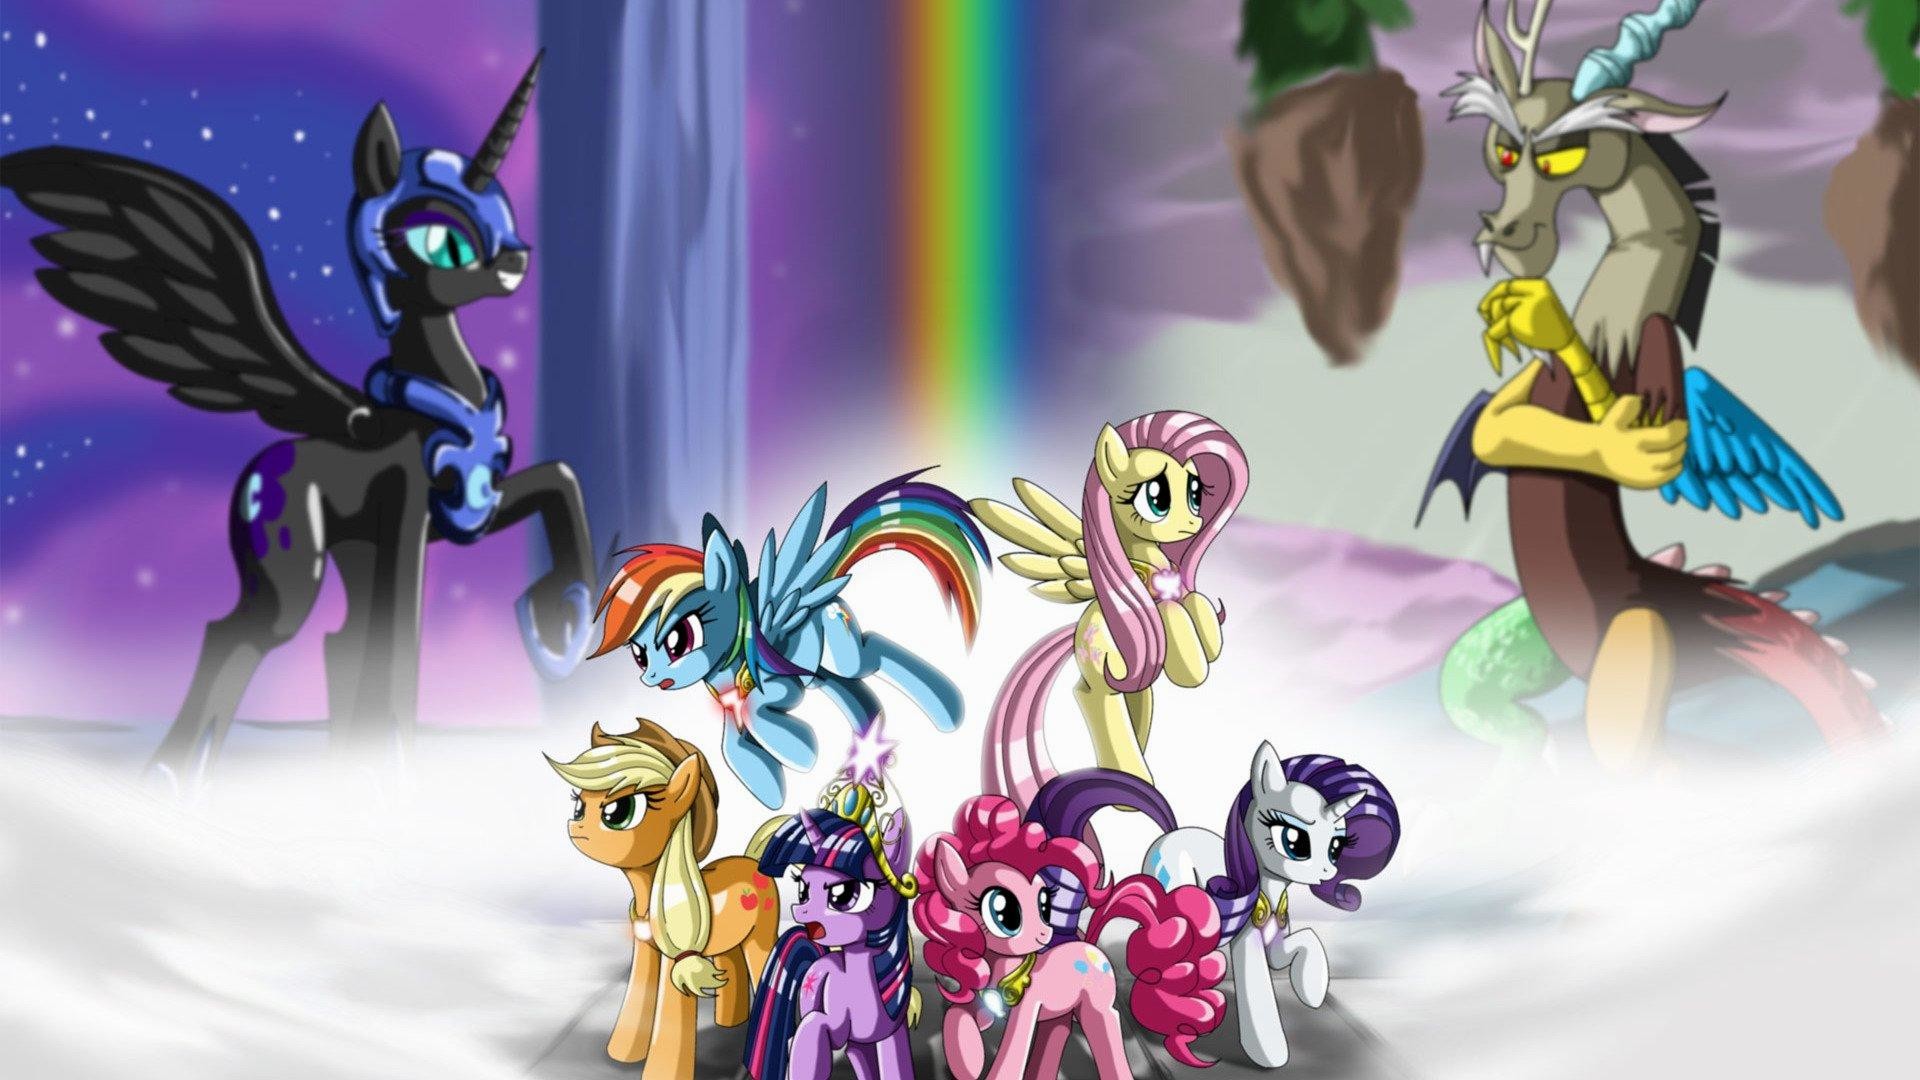 8. my little pony friendship is magic wallpaper HD8